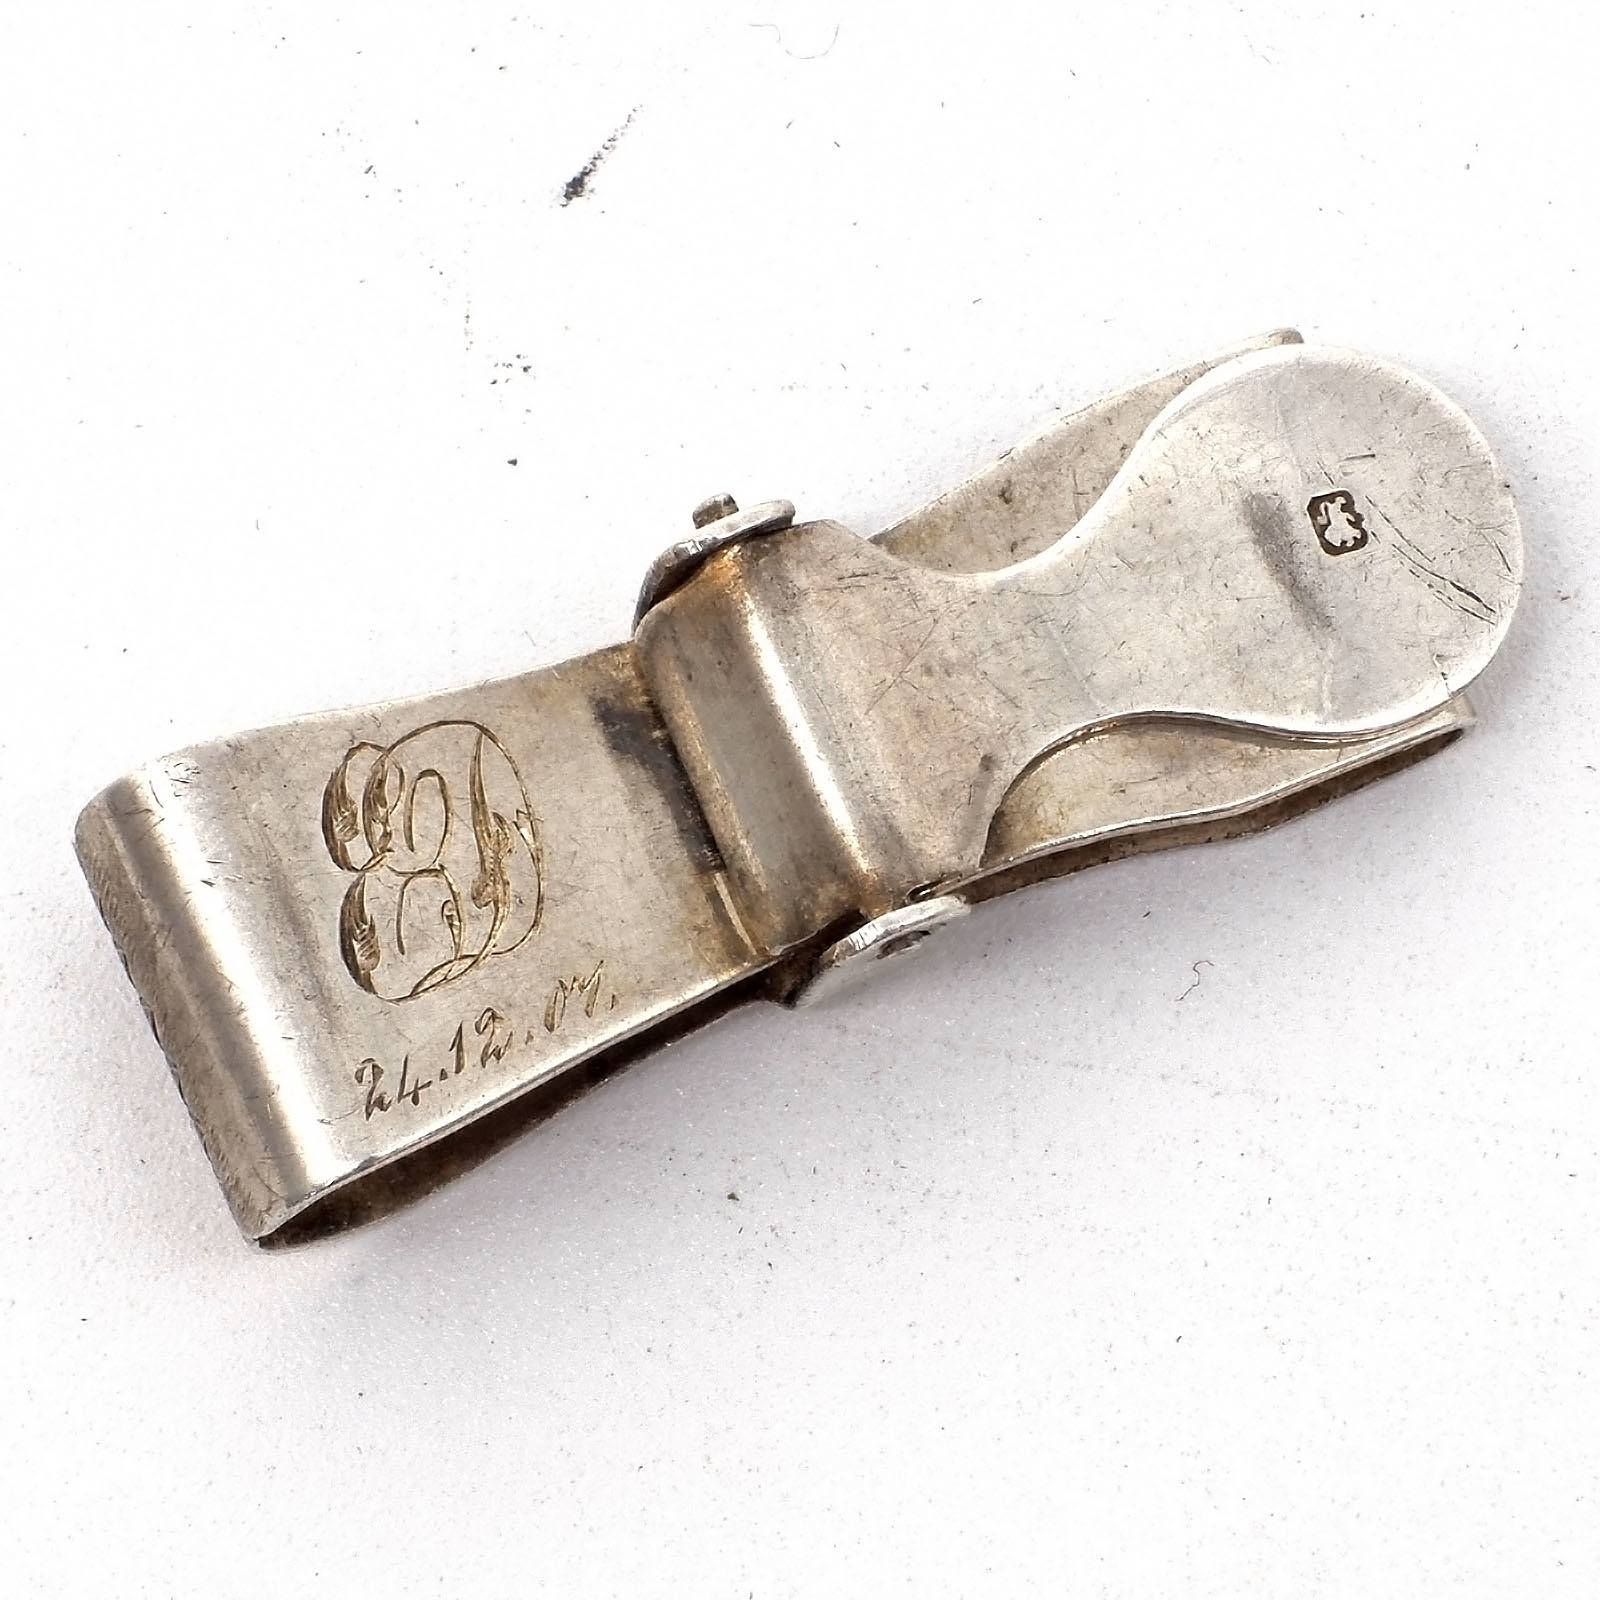 'Antique Sterling Silver Tie Grip, Birmingham, G E Walton & Co Ltd'